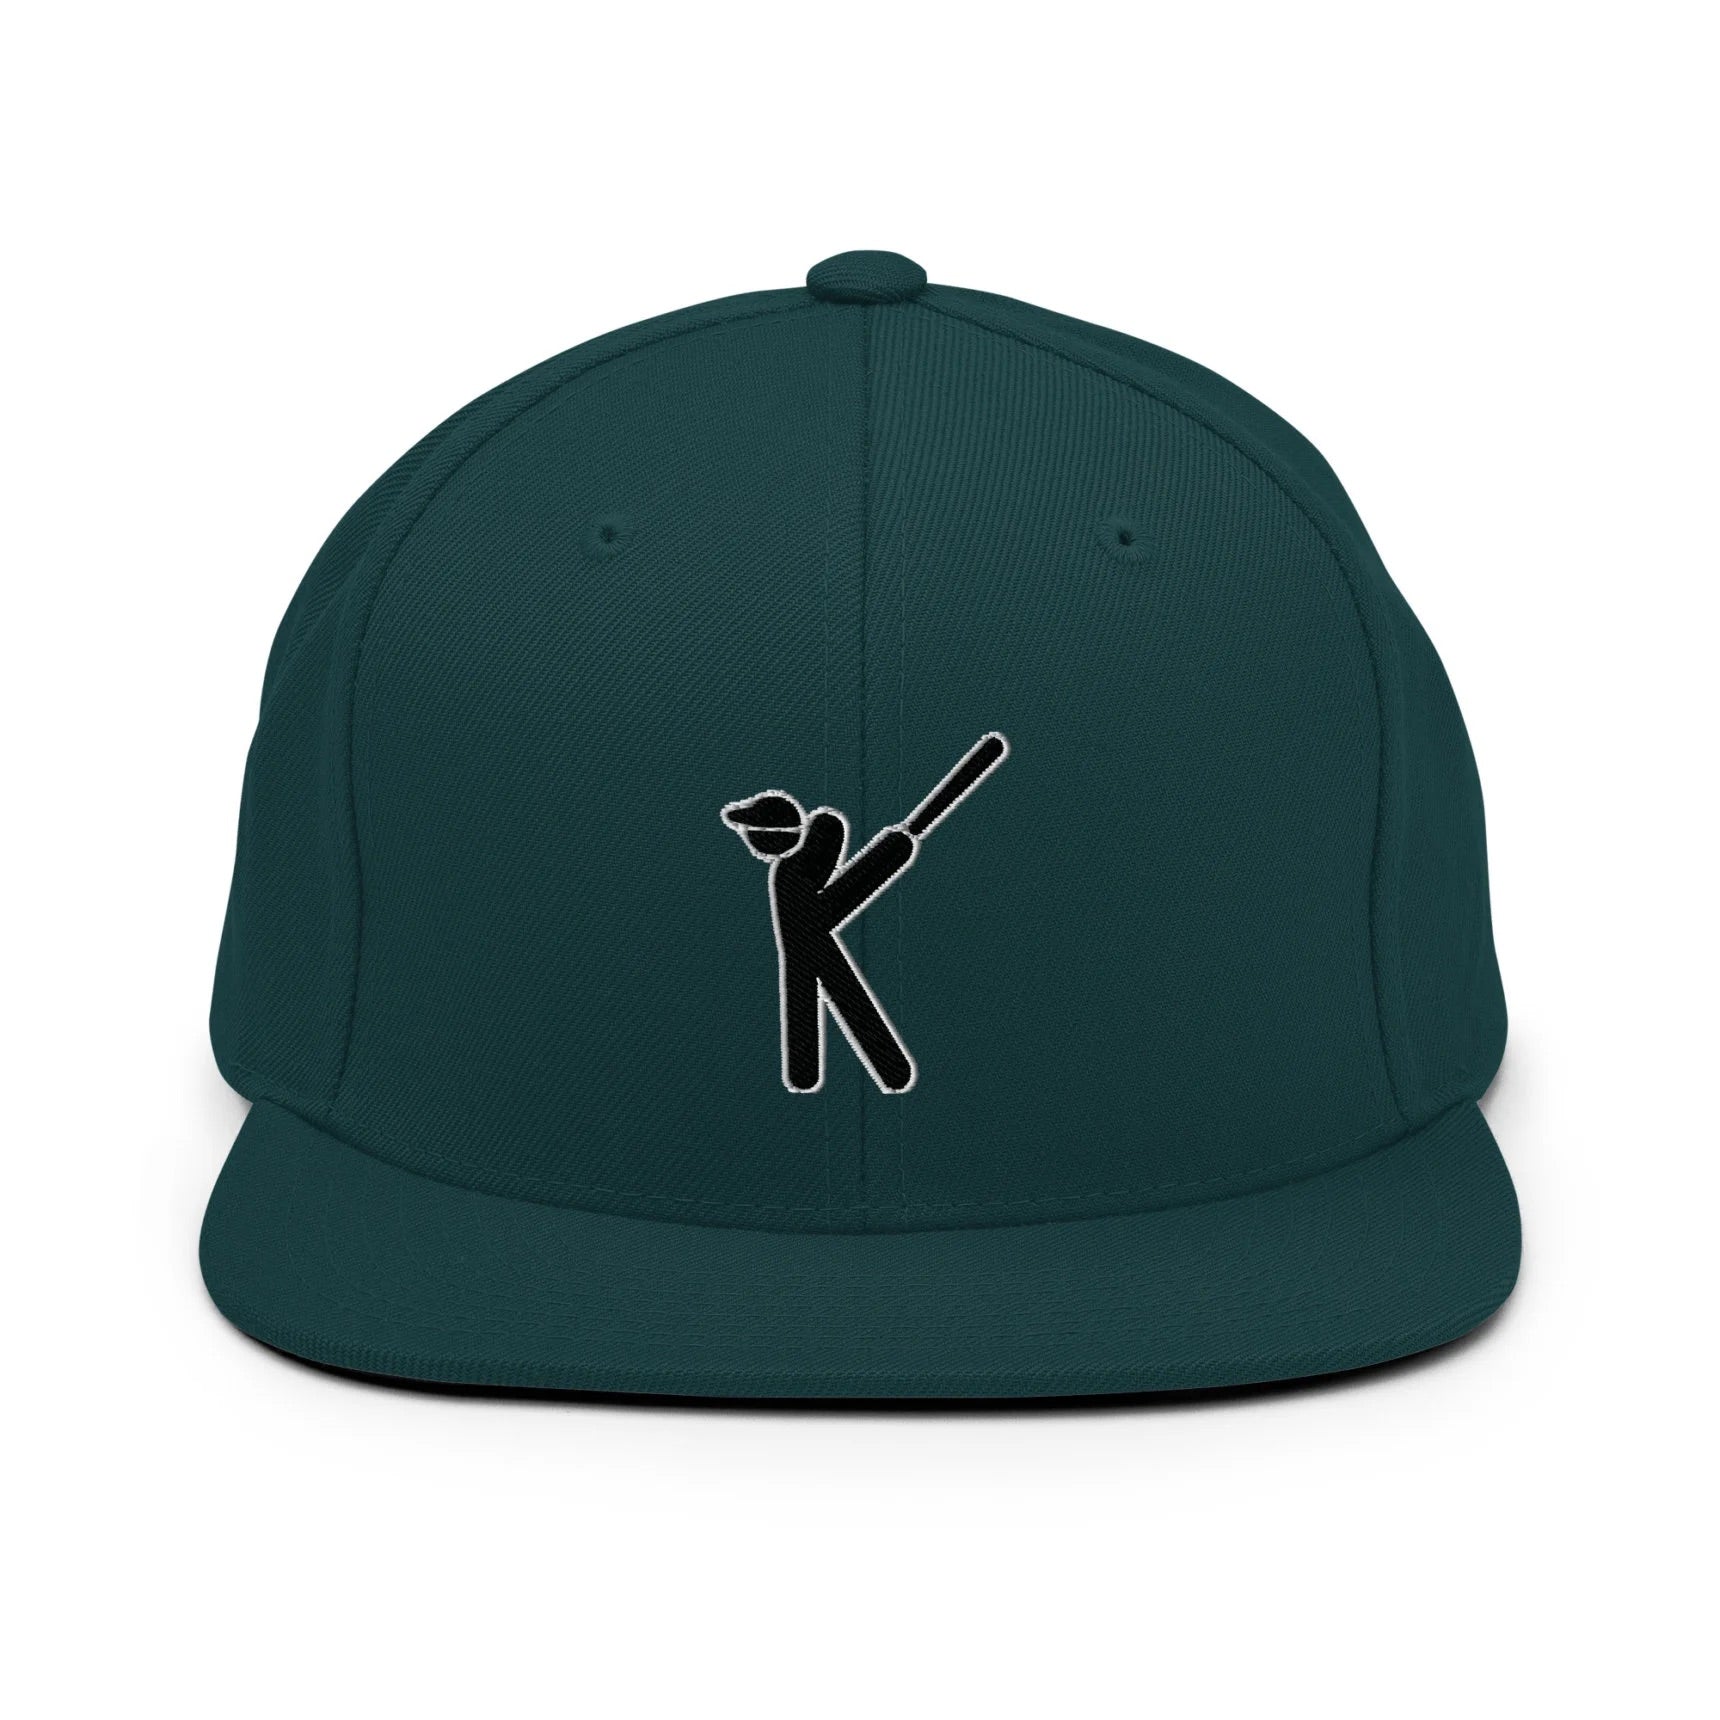 Kasabe ShowZone snapback hat in spruce green